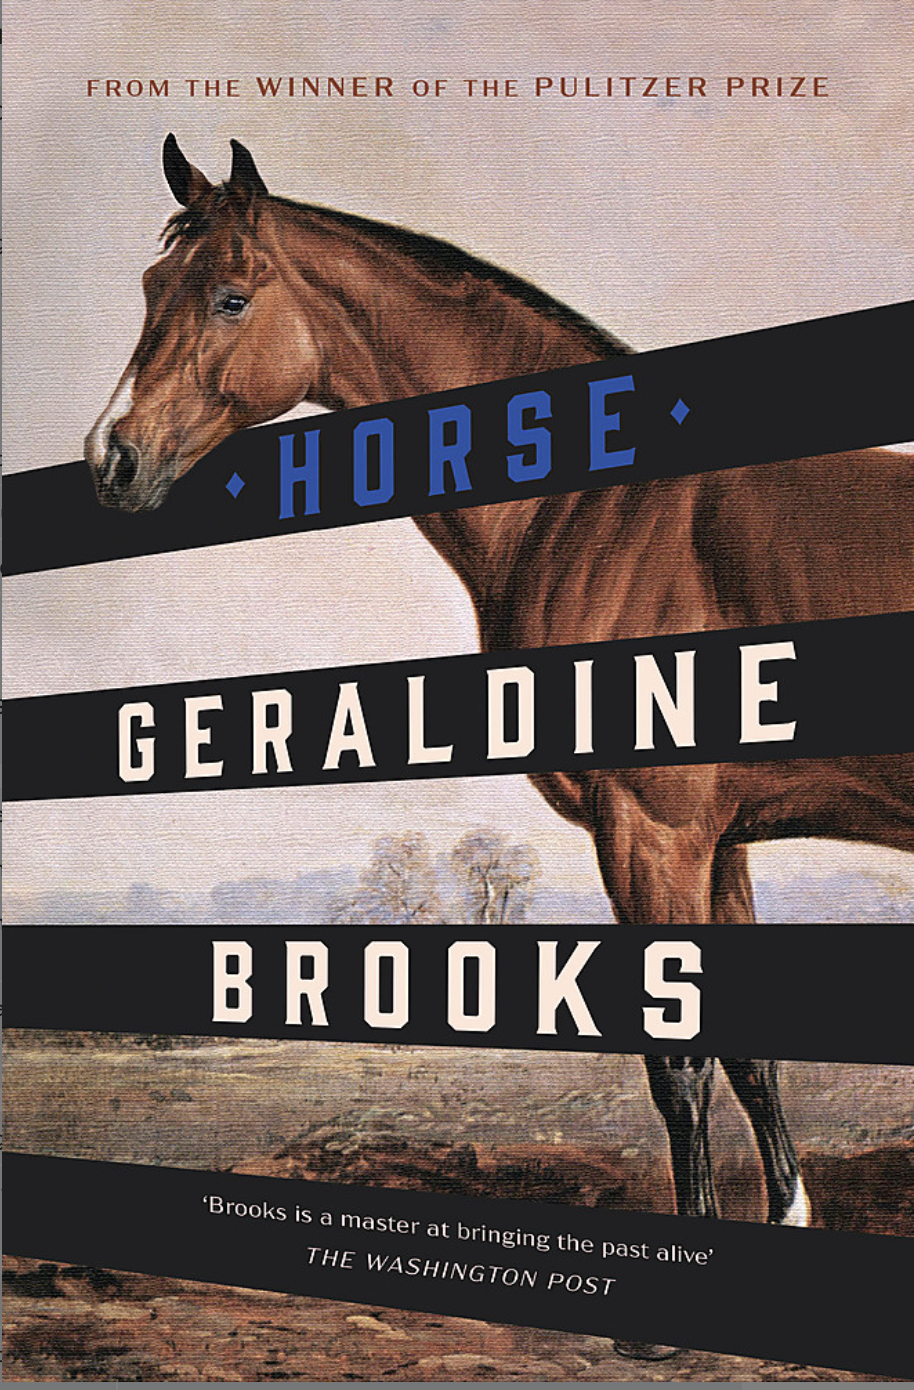 Horse - Geraldine Brooks